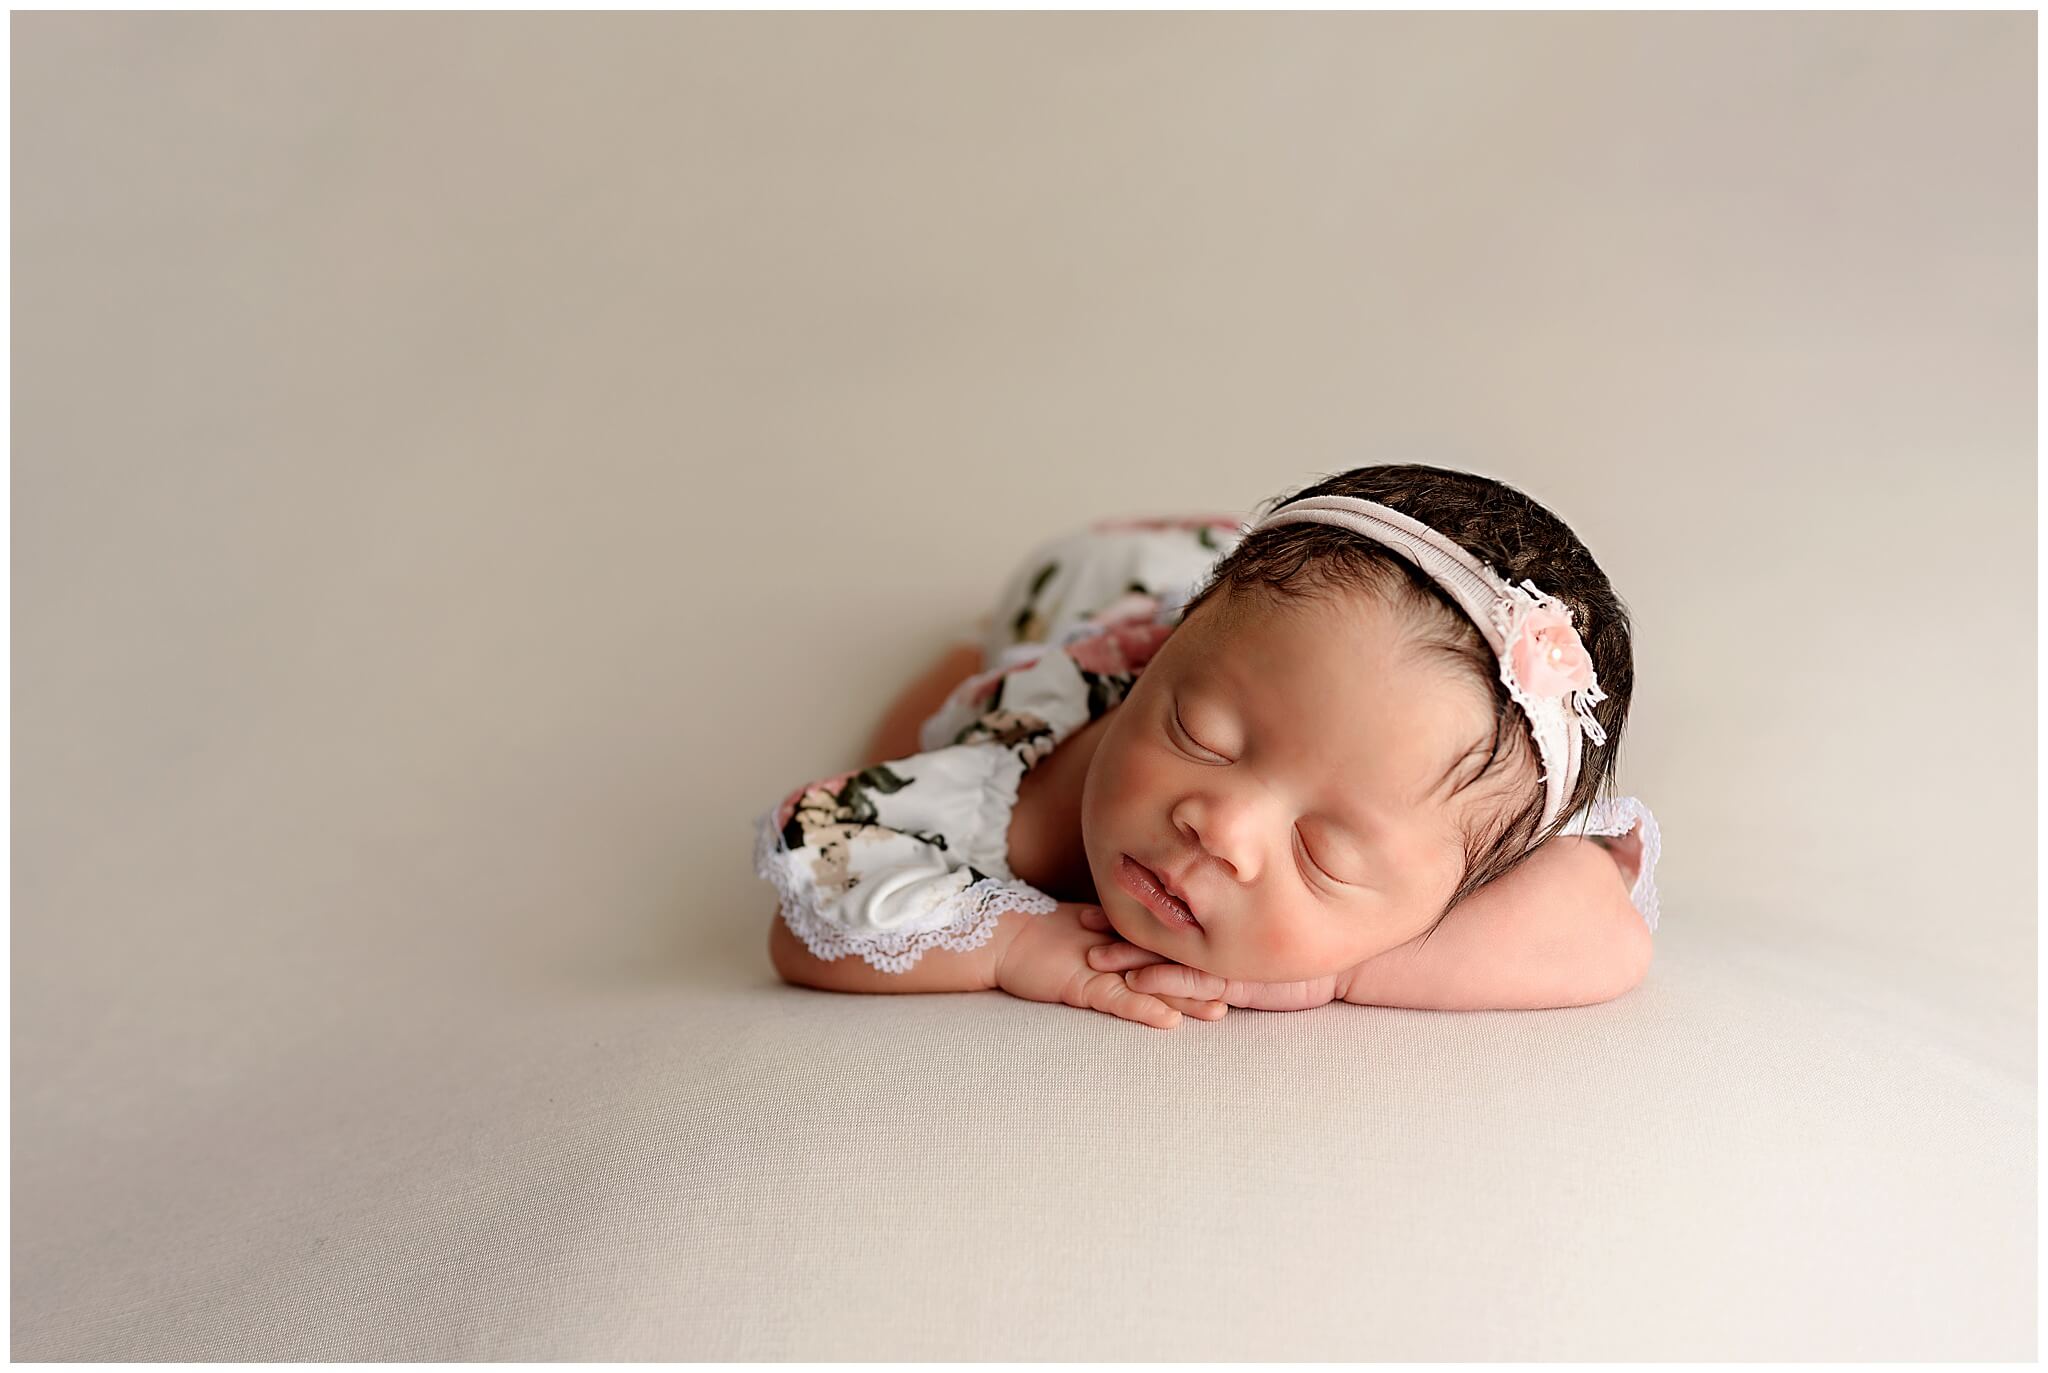 baby wearing pink headband laying chin on hands